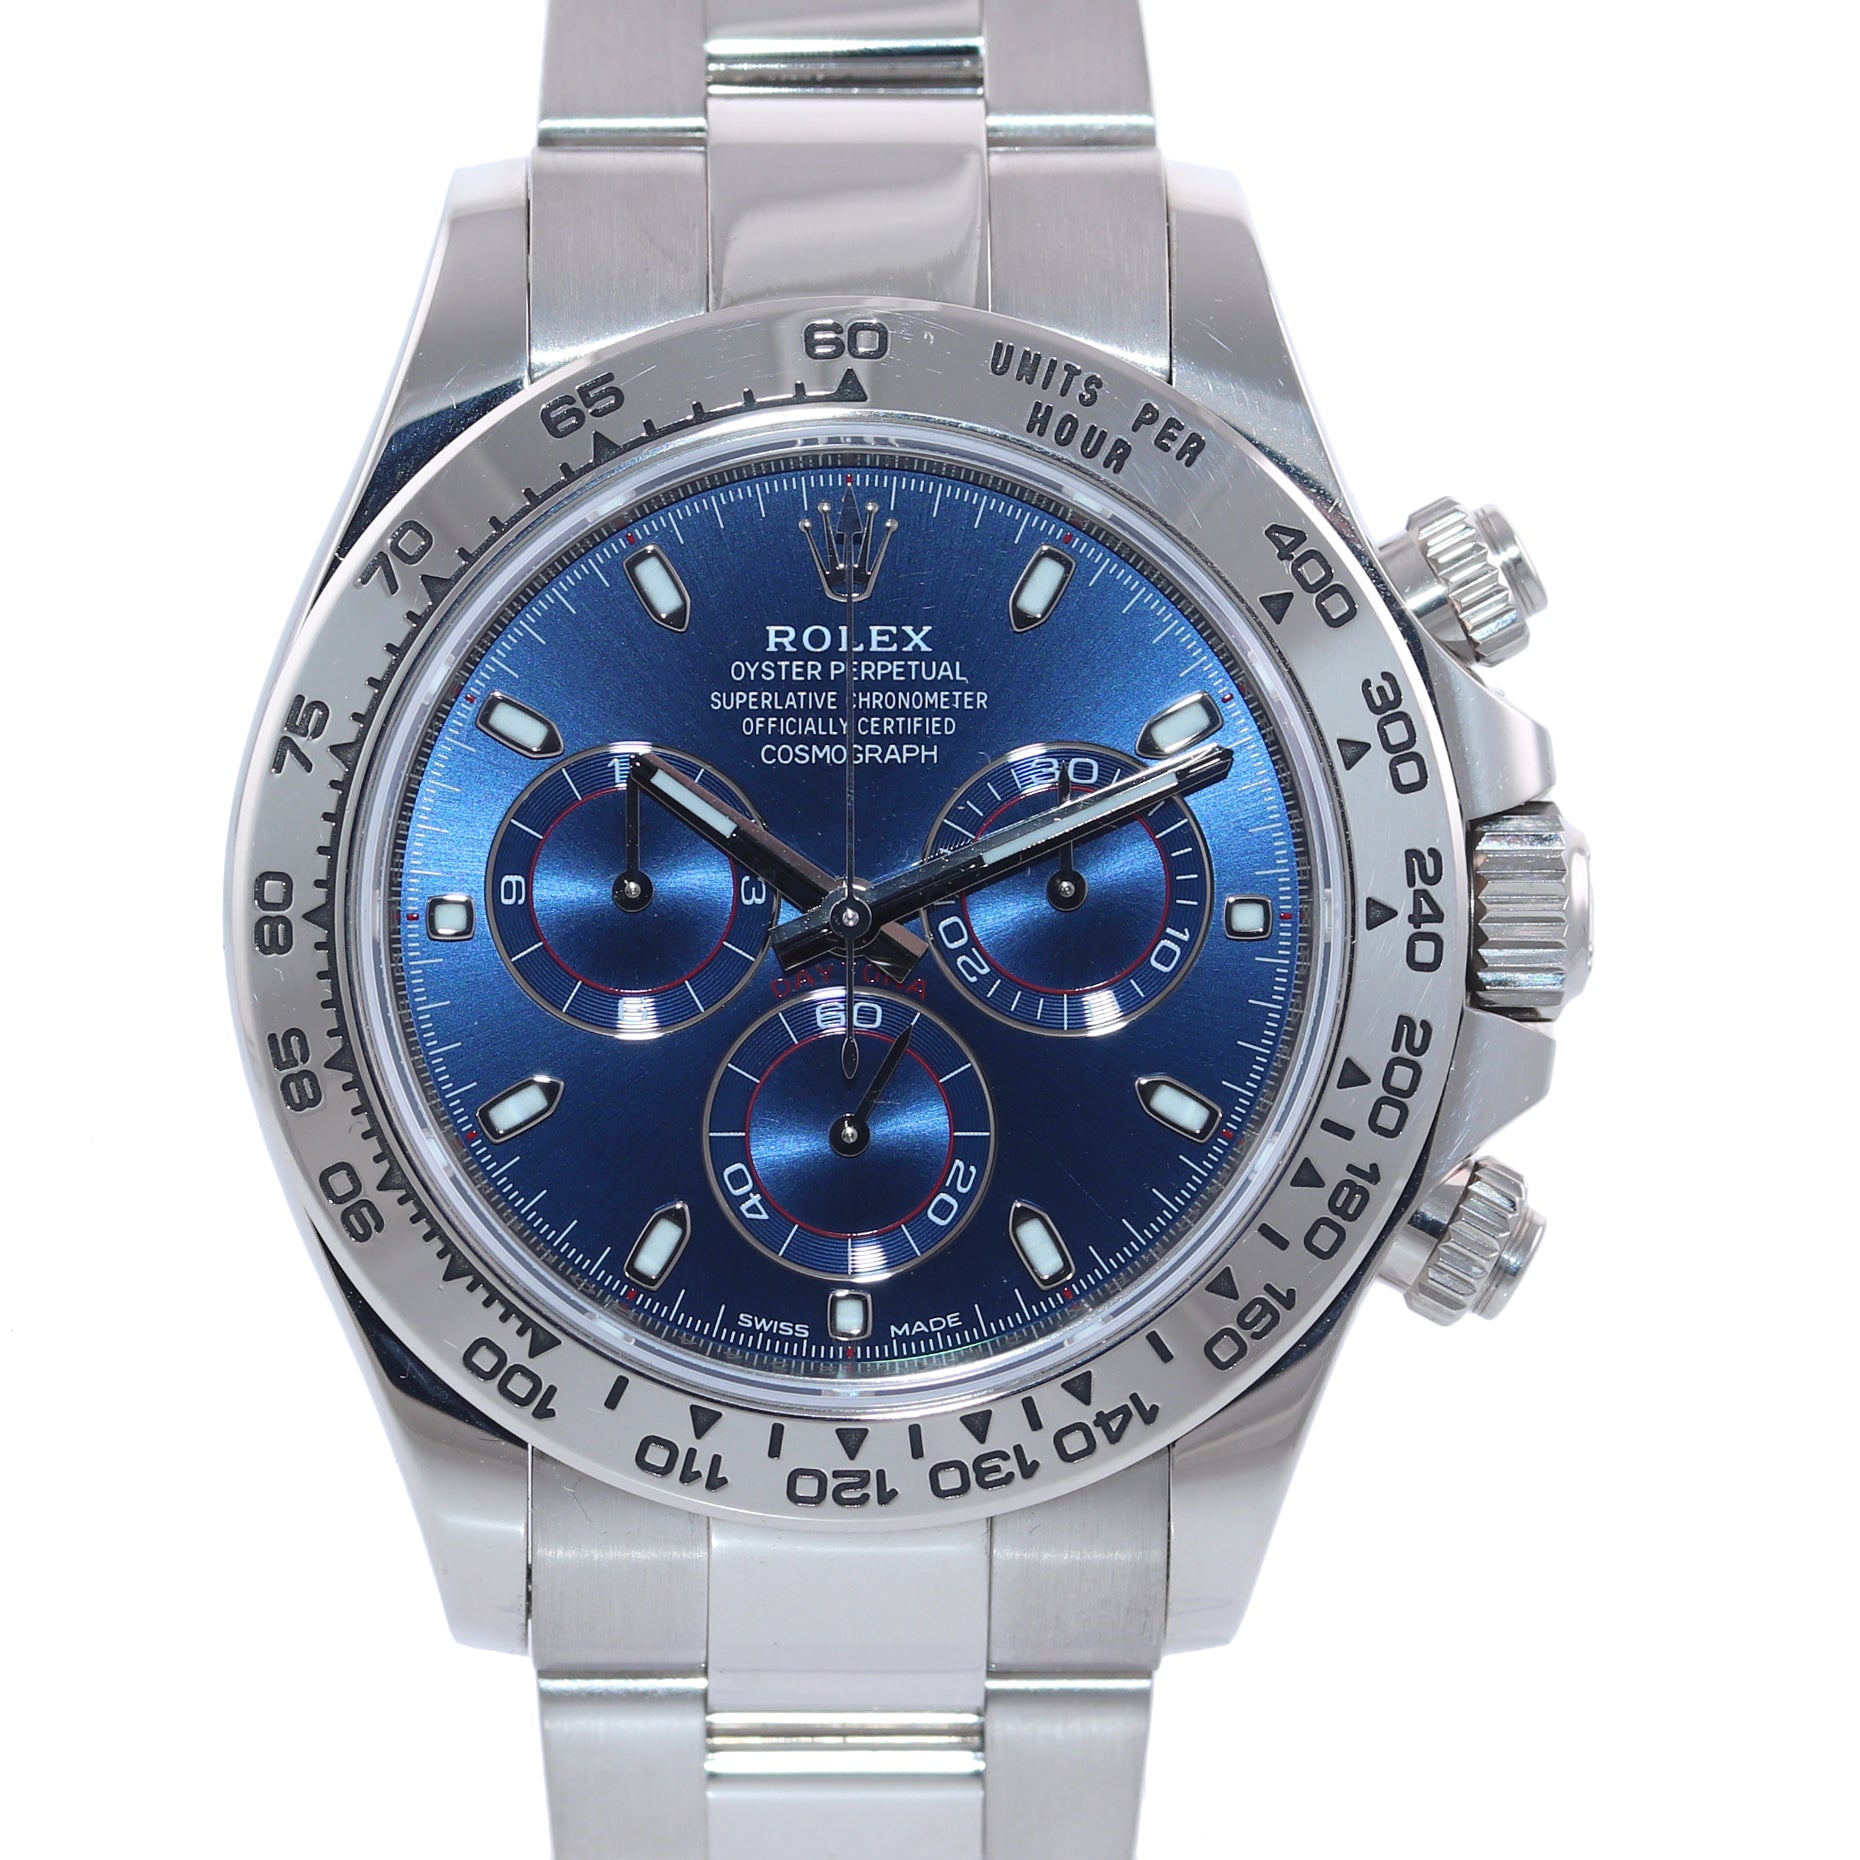 MINT 2017 PAPERS Rolex Daytona Blue Dial Chrono 116509 18k White Gold Watch Box